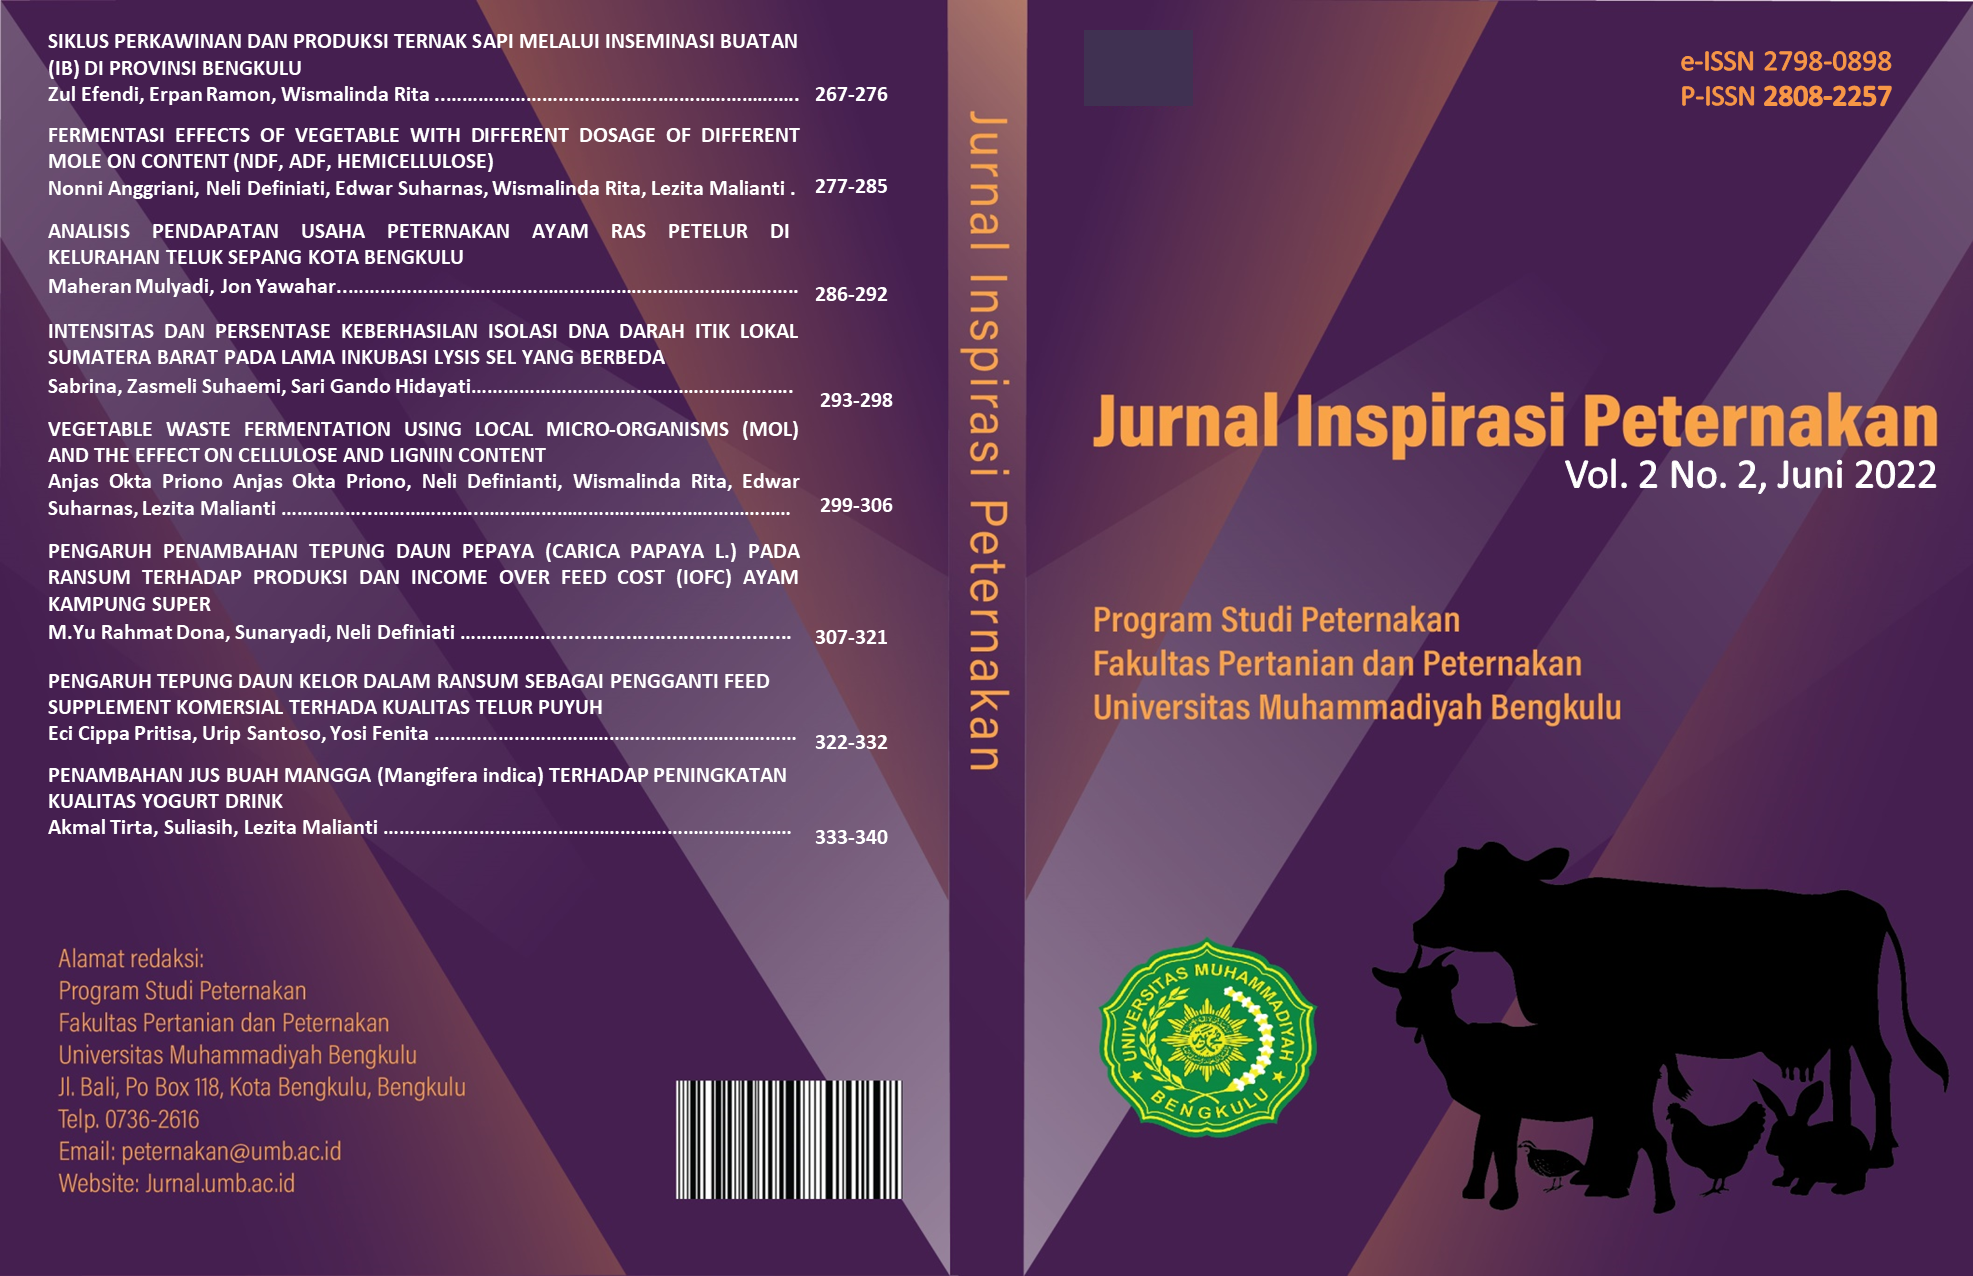 					View Vol. 2 No. 2 (2022): Jurnal Inspirasi Peternakan
				